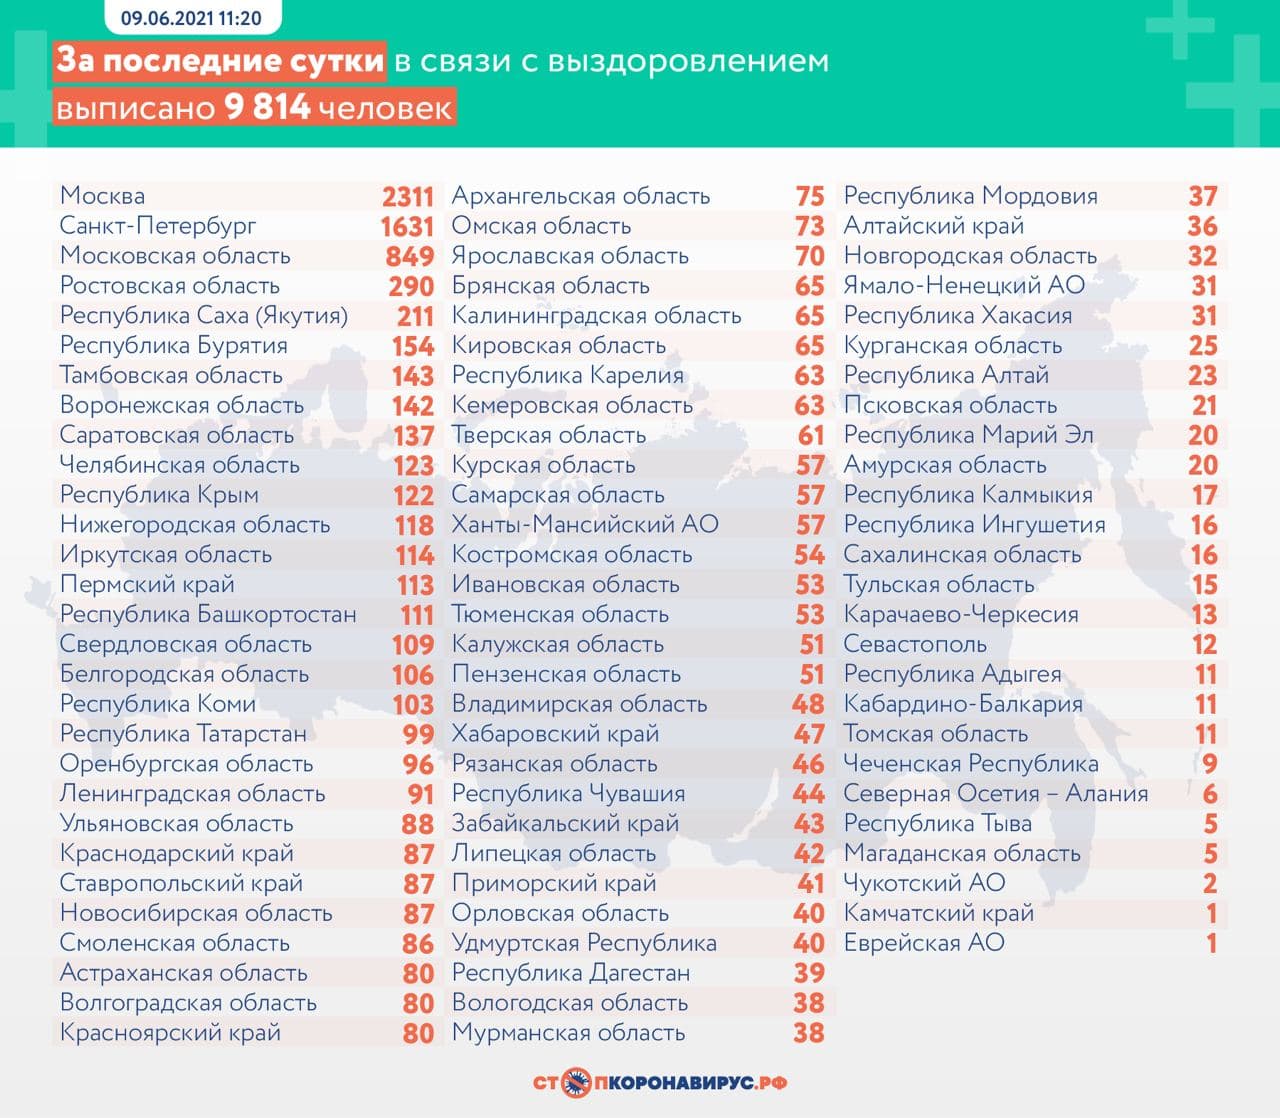 Оперативная статистика по коронавирусу в России на 9 июня